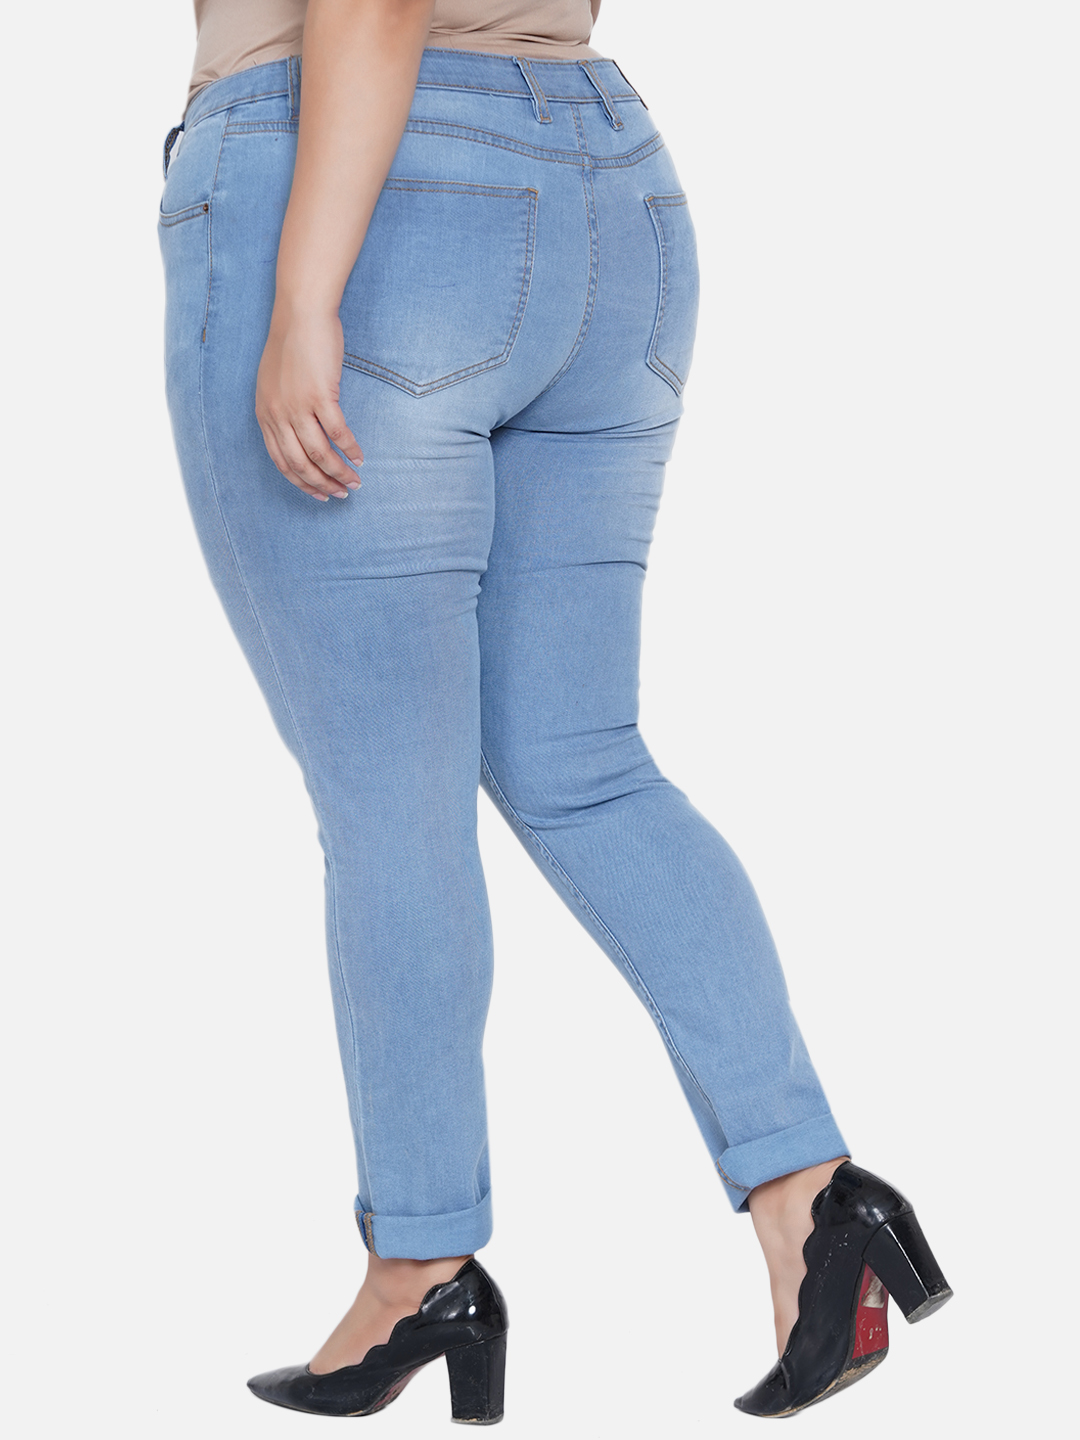 bottomwear_kiaahvi/jeans/KIAJ37/kiaj37-5.jpg